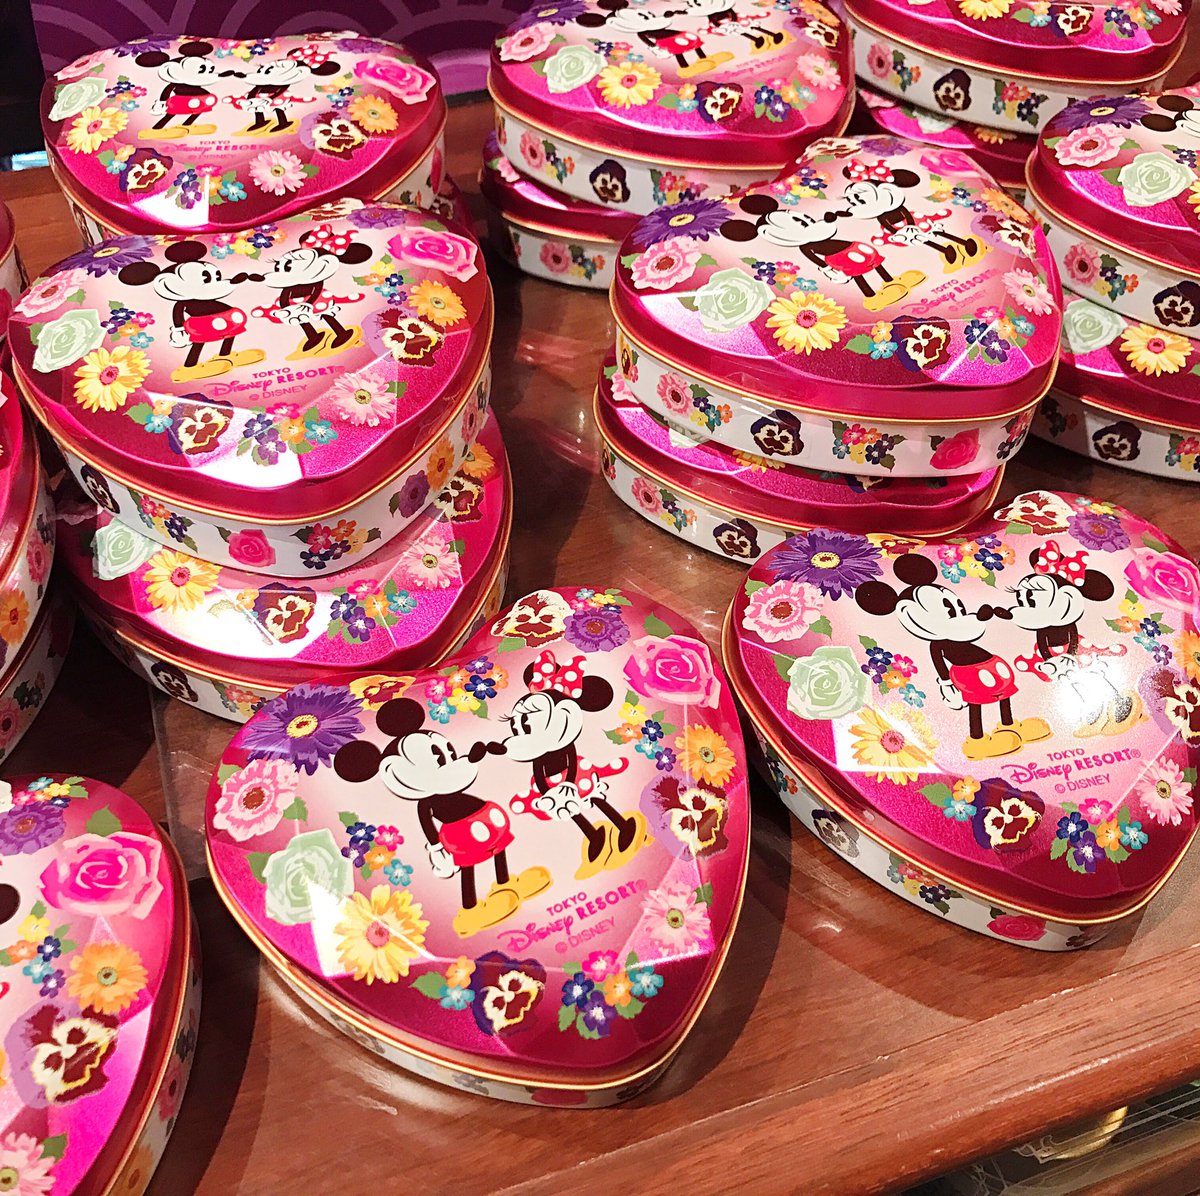 Mezzomikiのディズニーブログ Pe Twitter カラフル可愛いミッキー ミニーのハート型缶パッケージに入ったチョコレートのお土産 新発売 価格600円です T Co Ys76mknelu